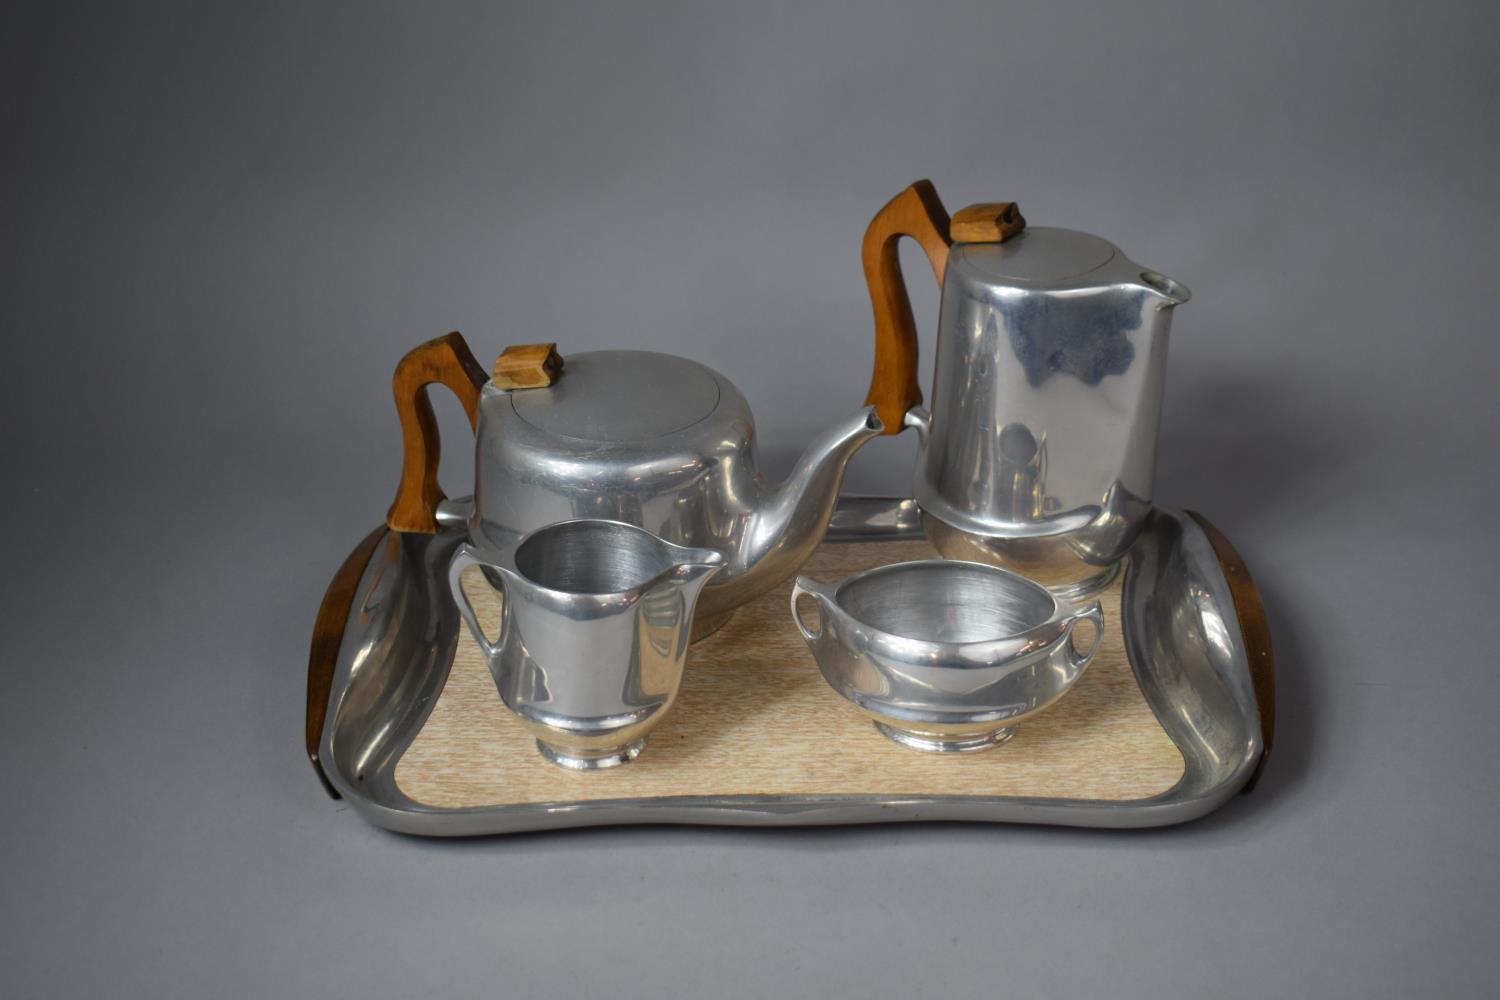 A Four Piece Picquot Ware Tea Set Comprising Teapot, Milk, Sugar, Coffee and Tray